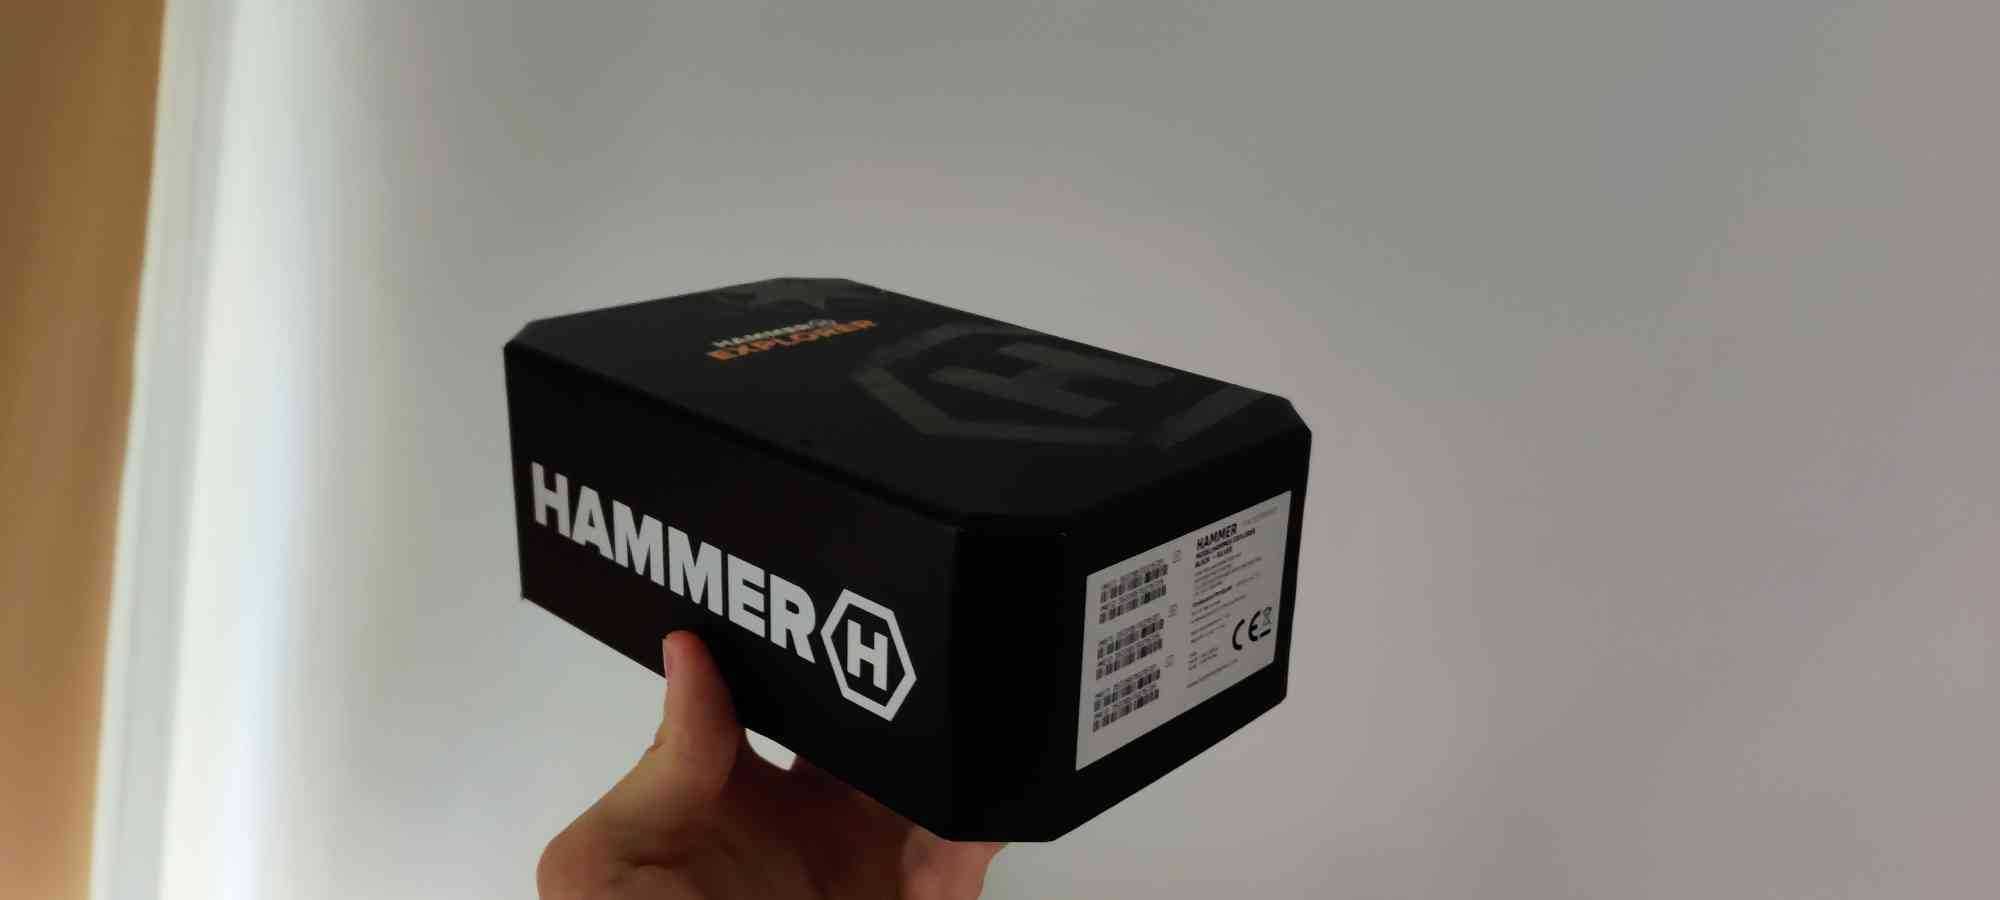 Hammer explorer black + silver